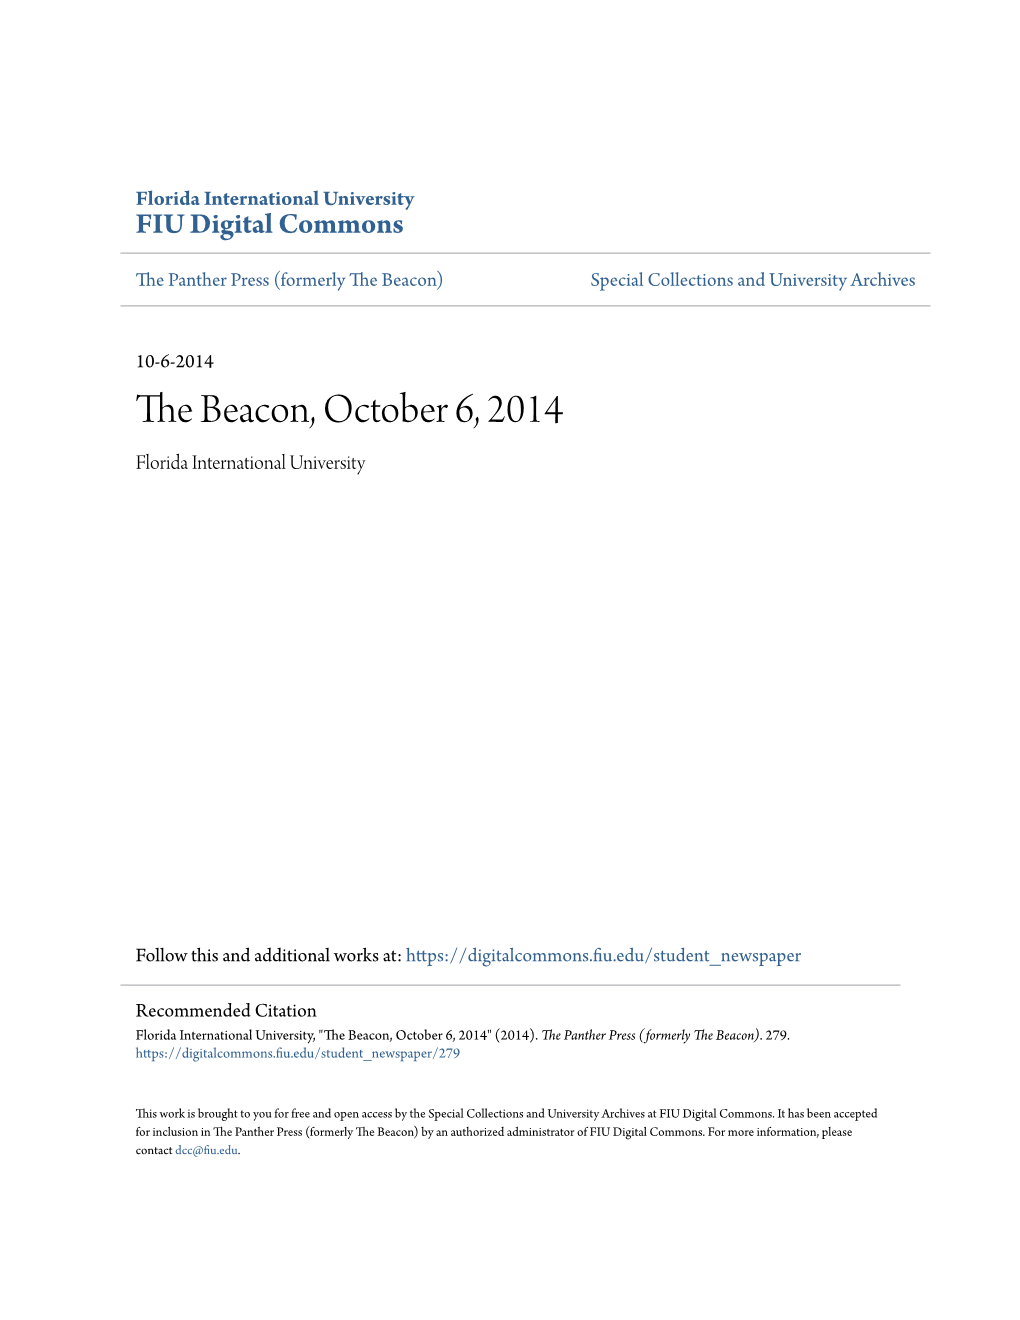 The Beacon, October 6, 2014 Florida International University